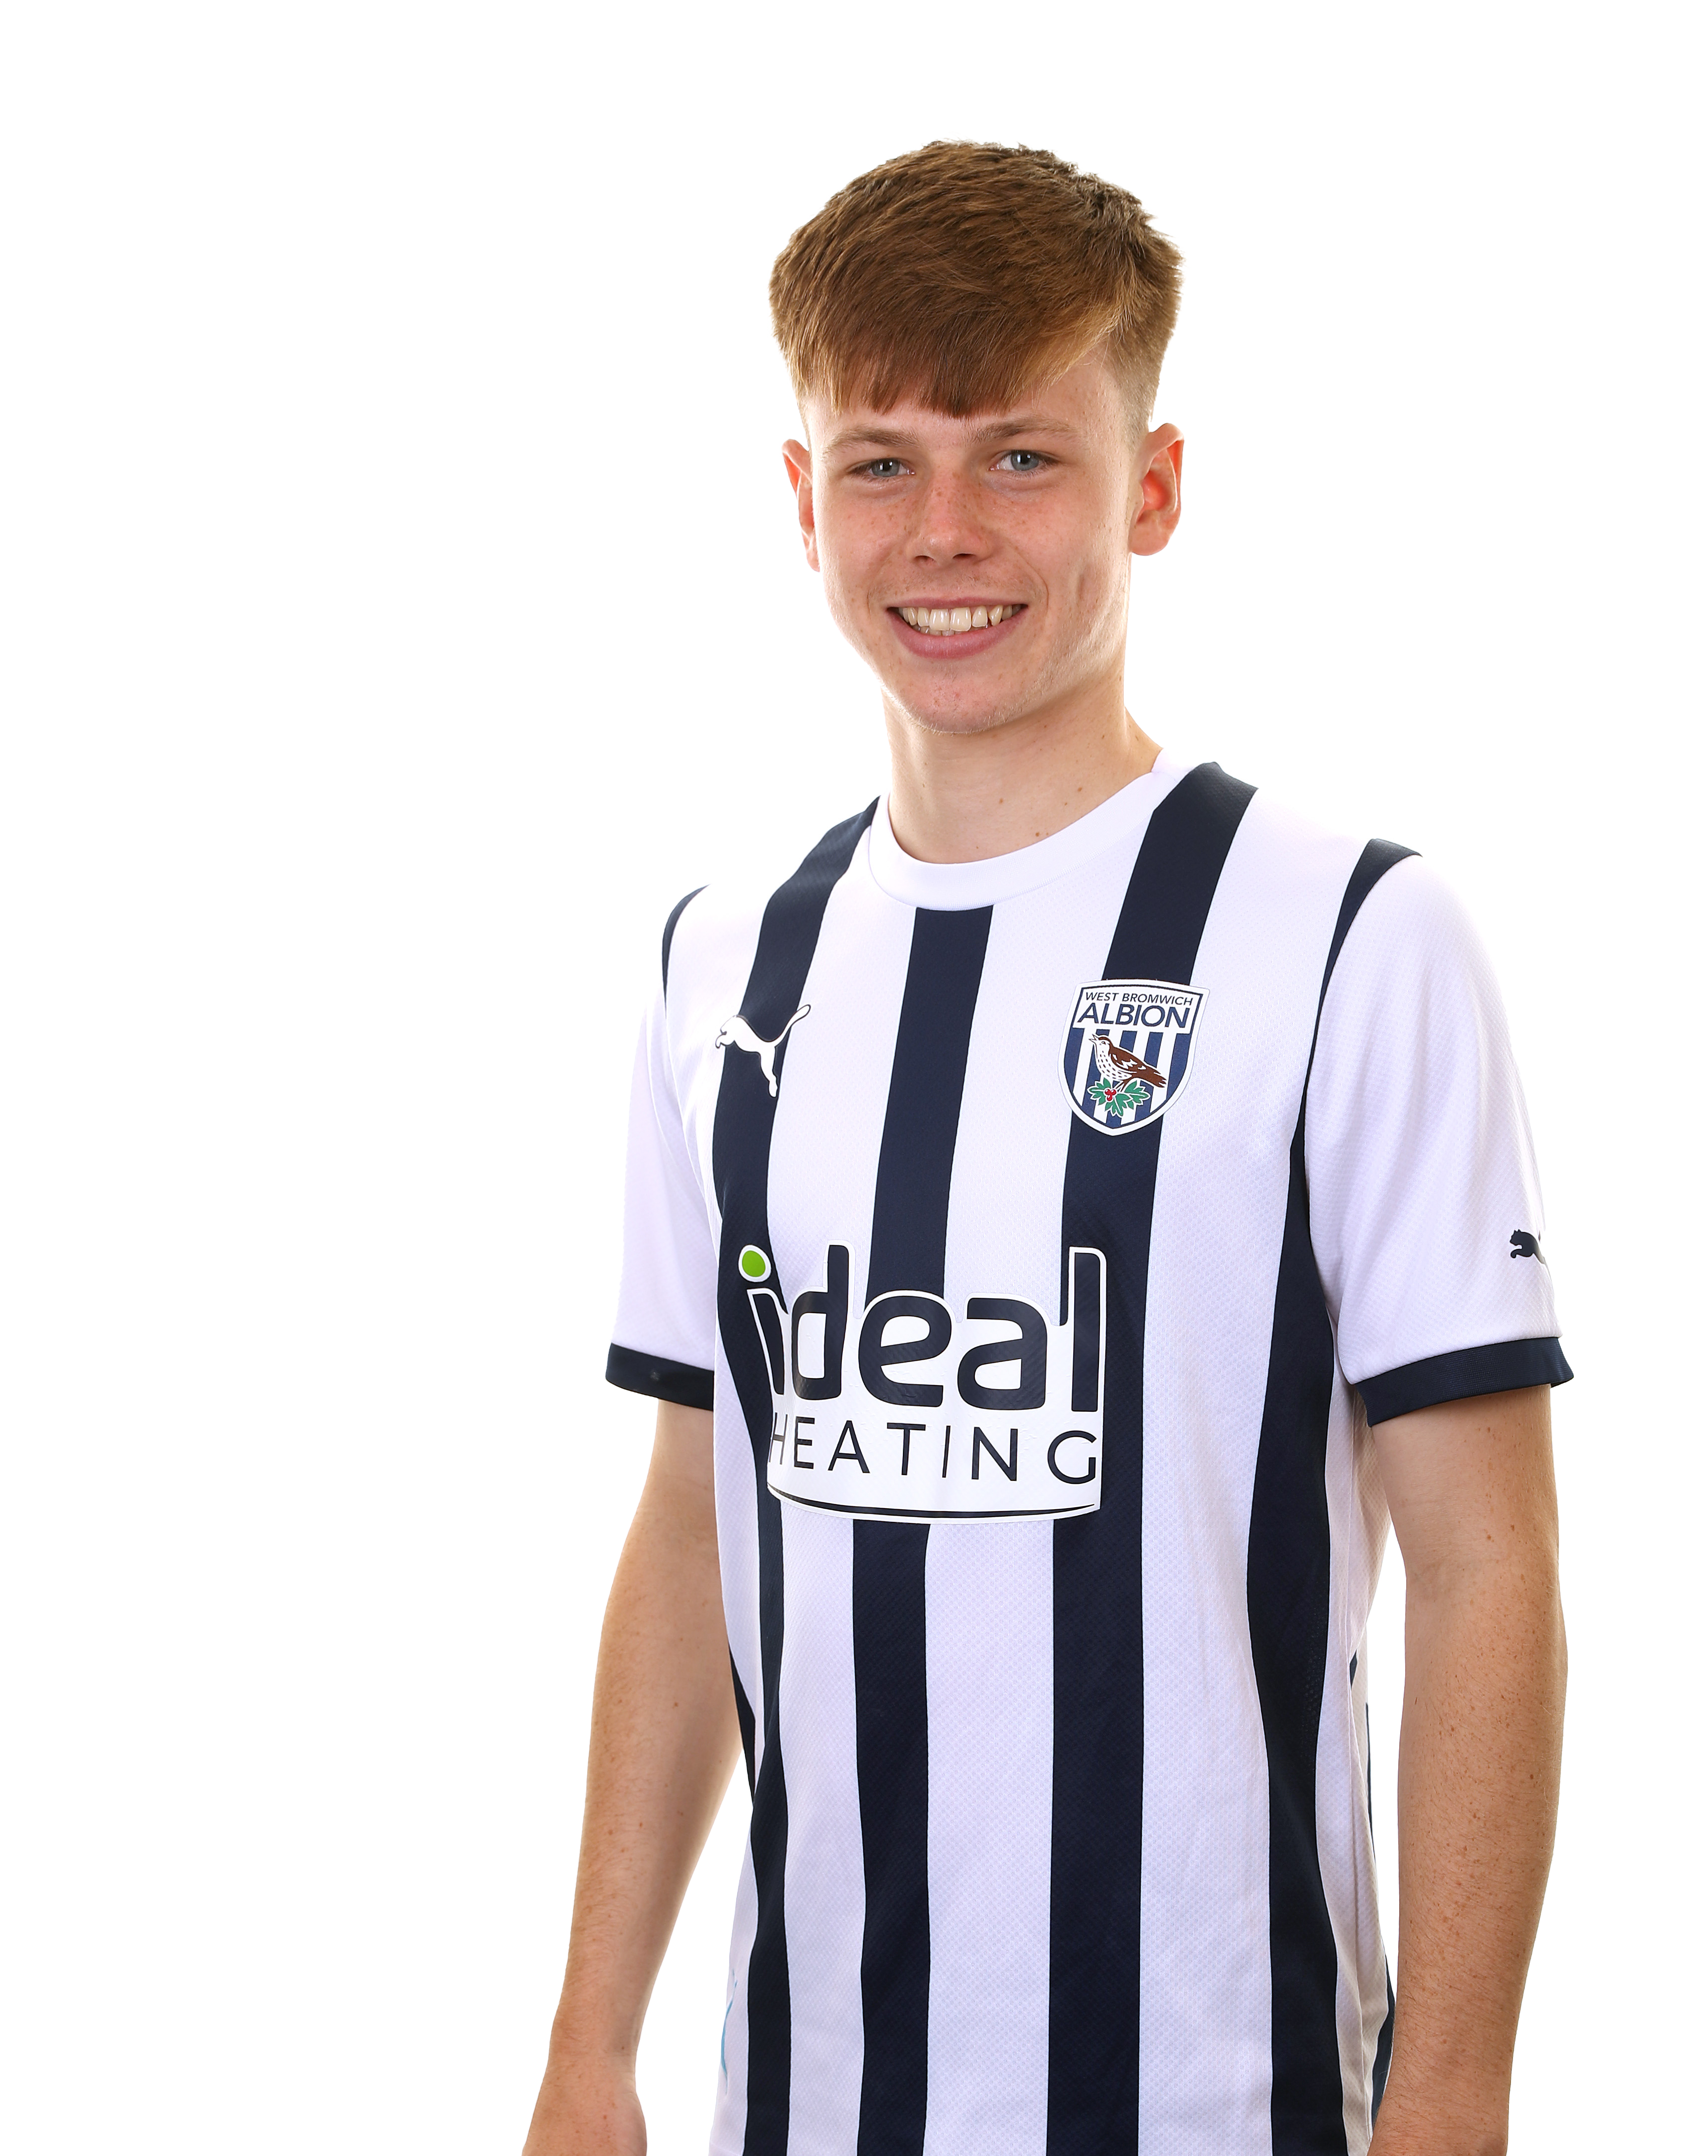 A photo headshot of Albion Under-21s player Fenton Heard ahead of the 2023/24 season